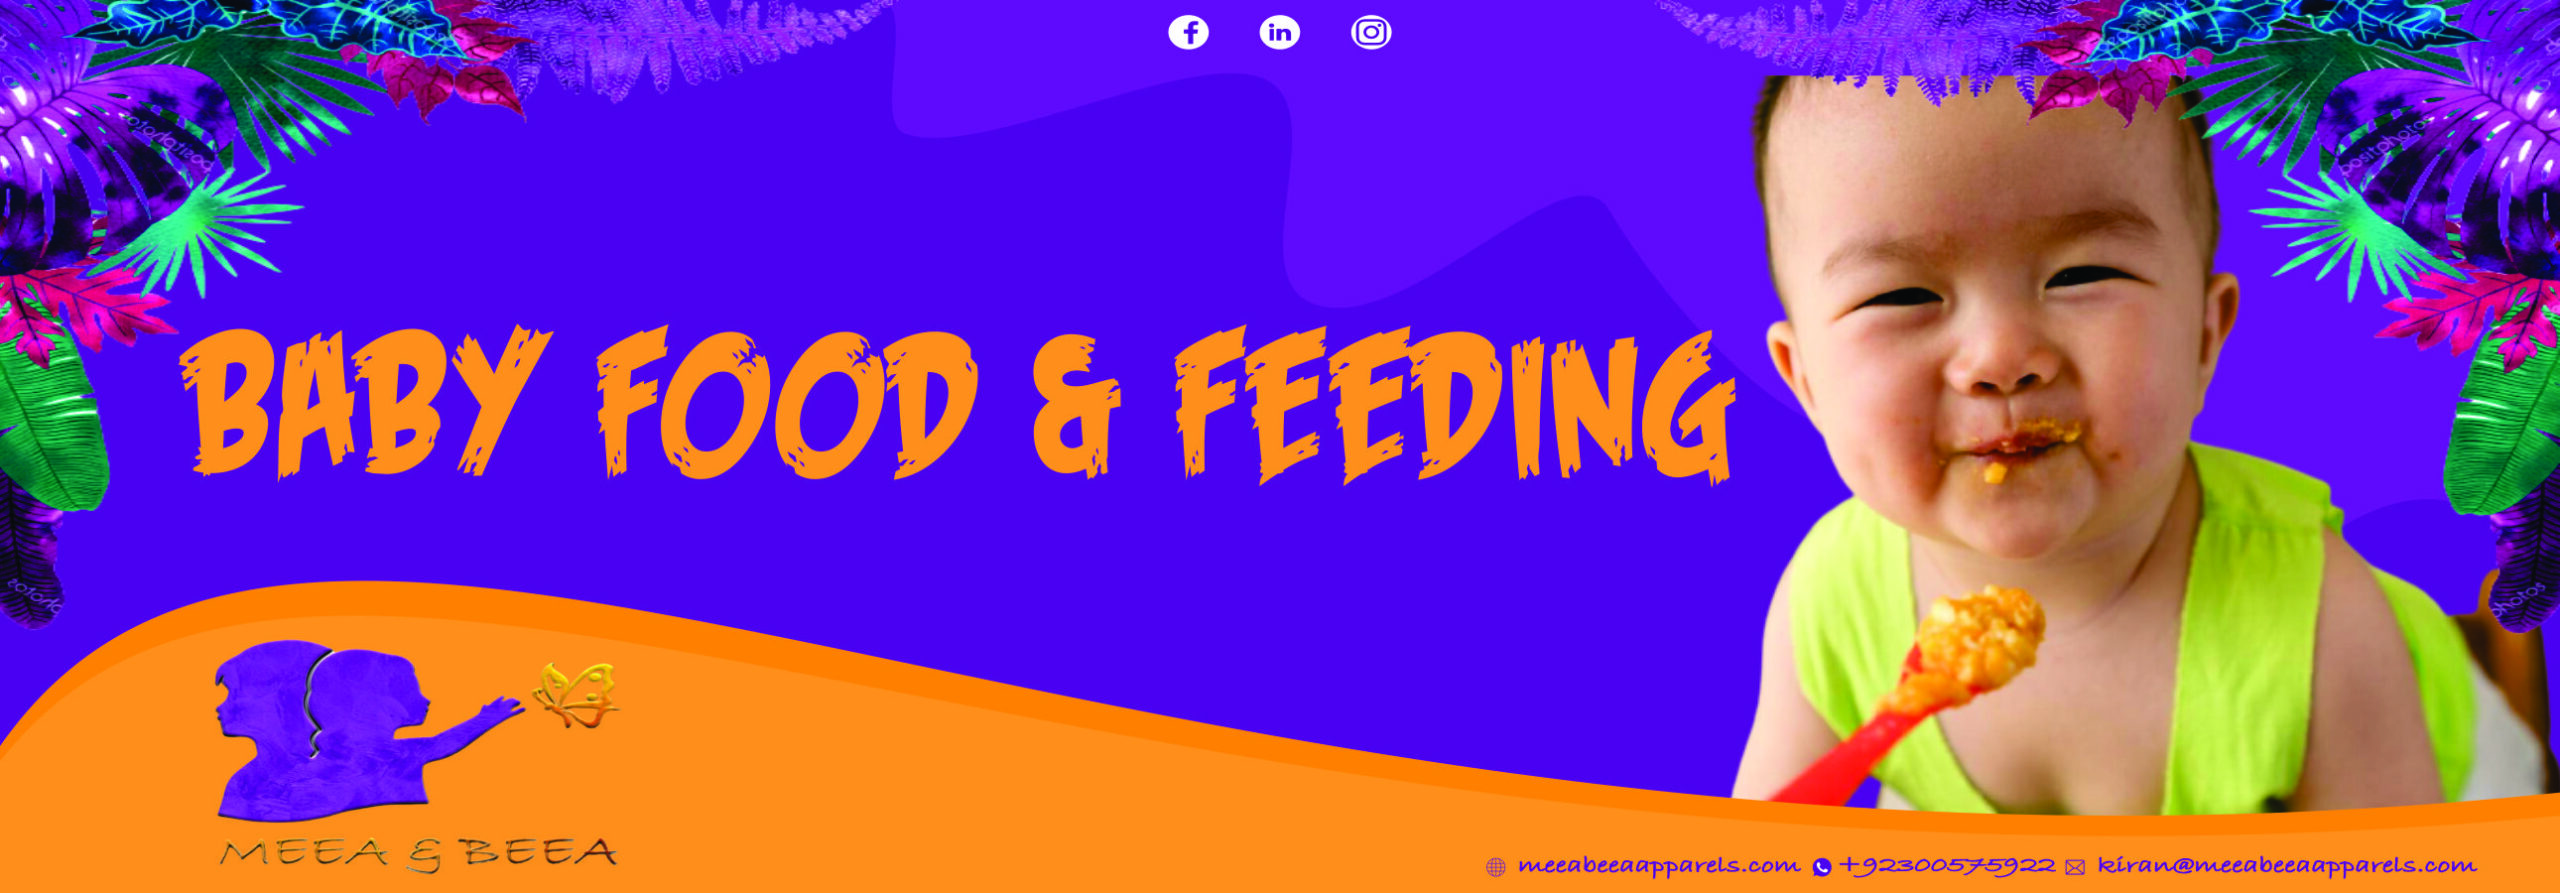 Baby Food & Feeding